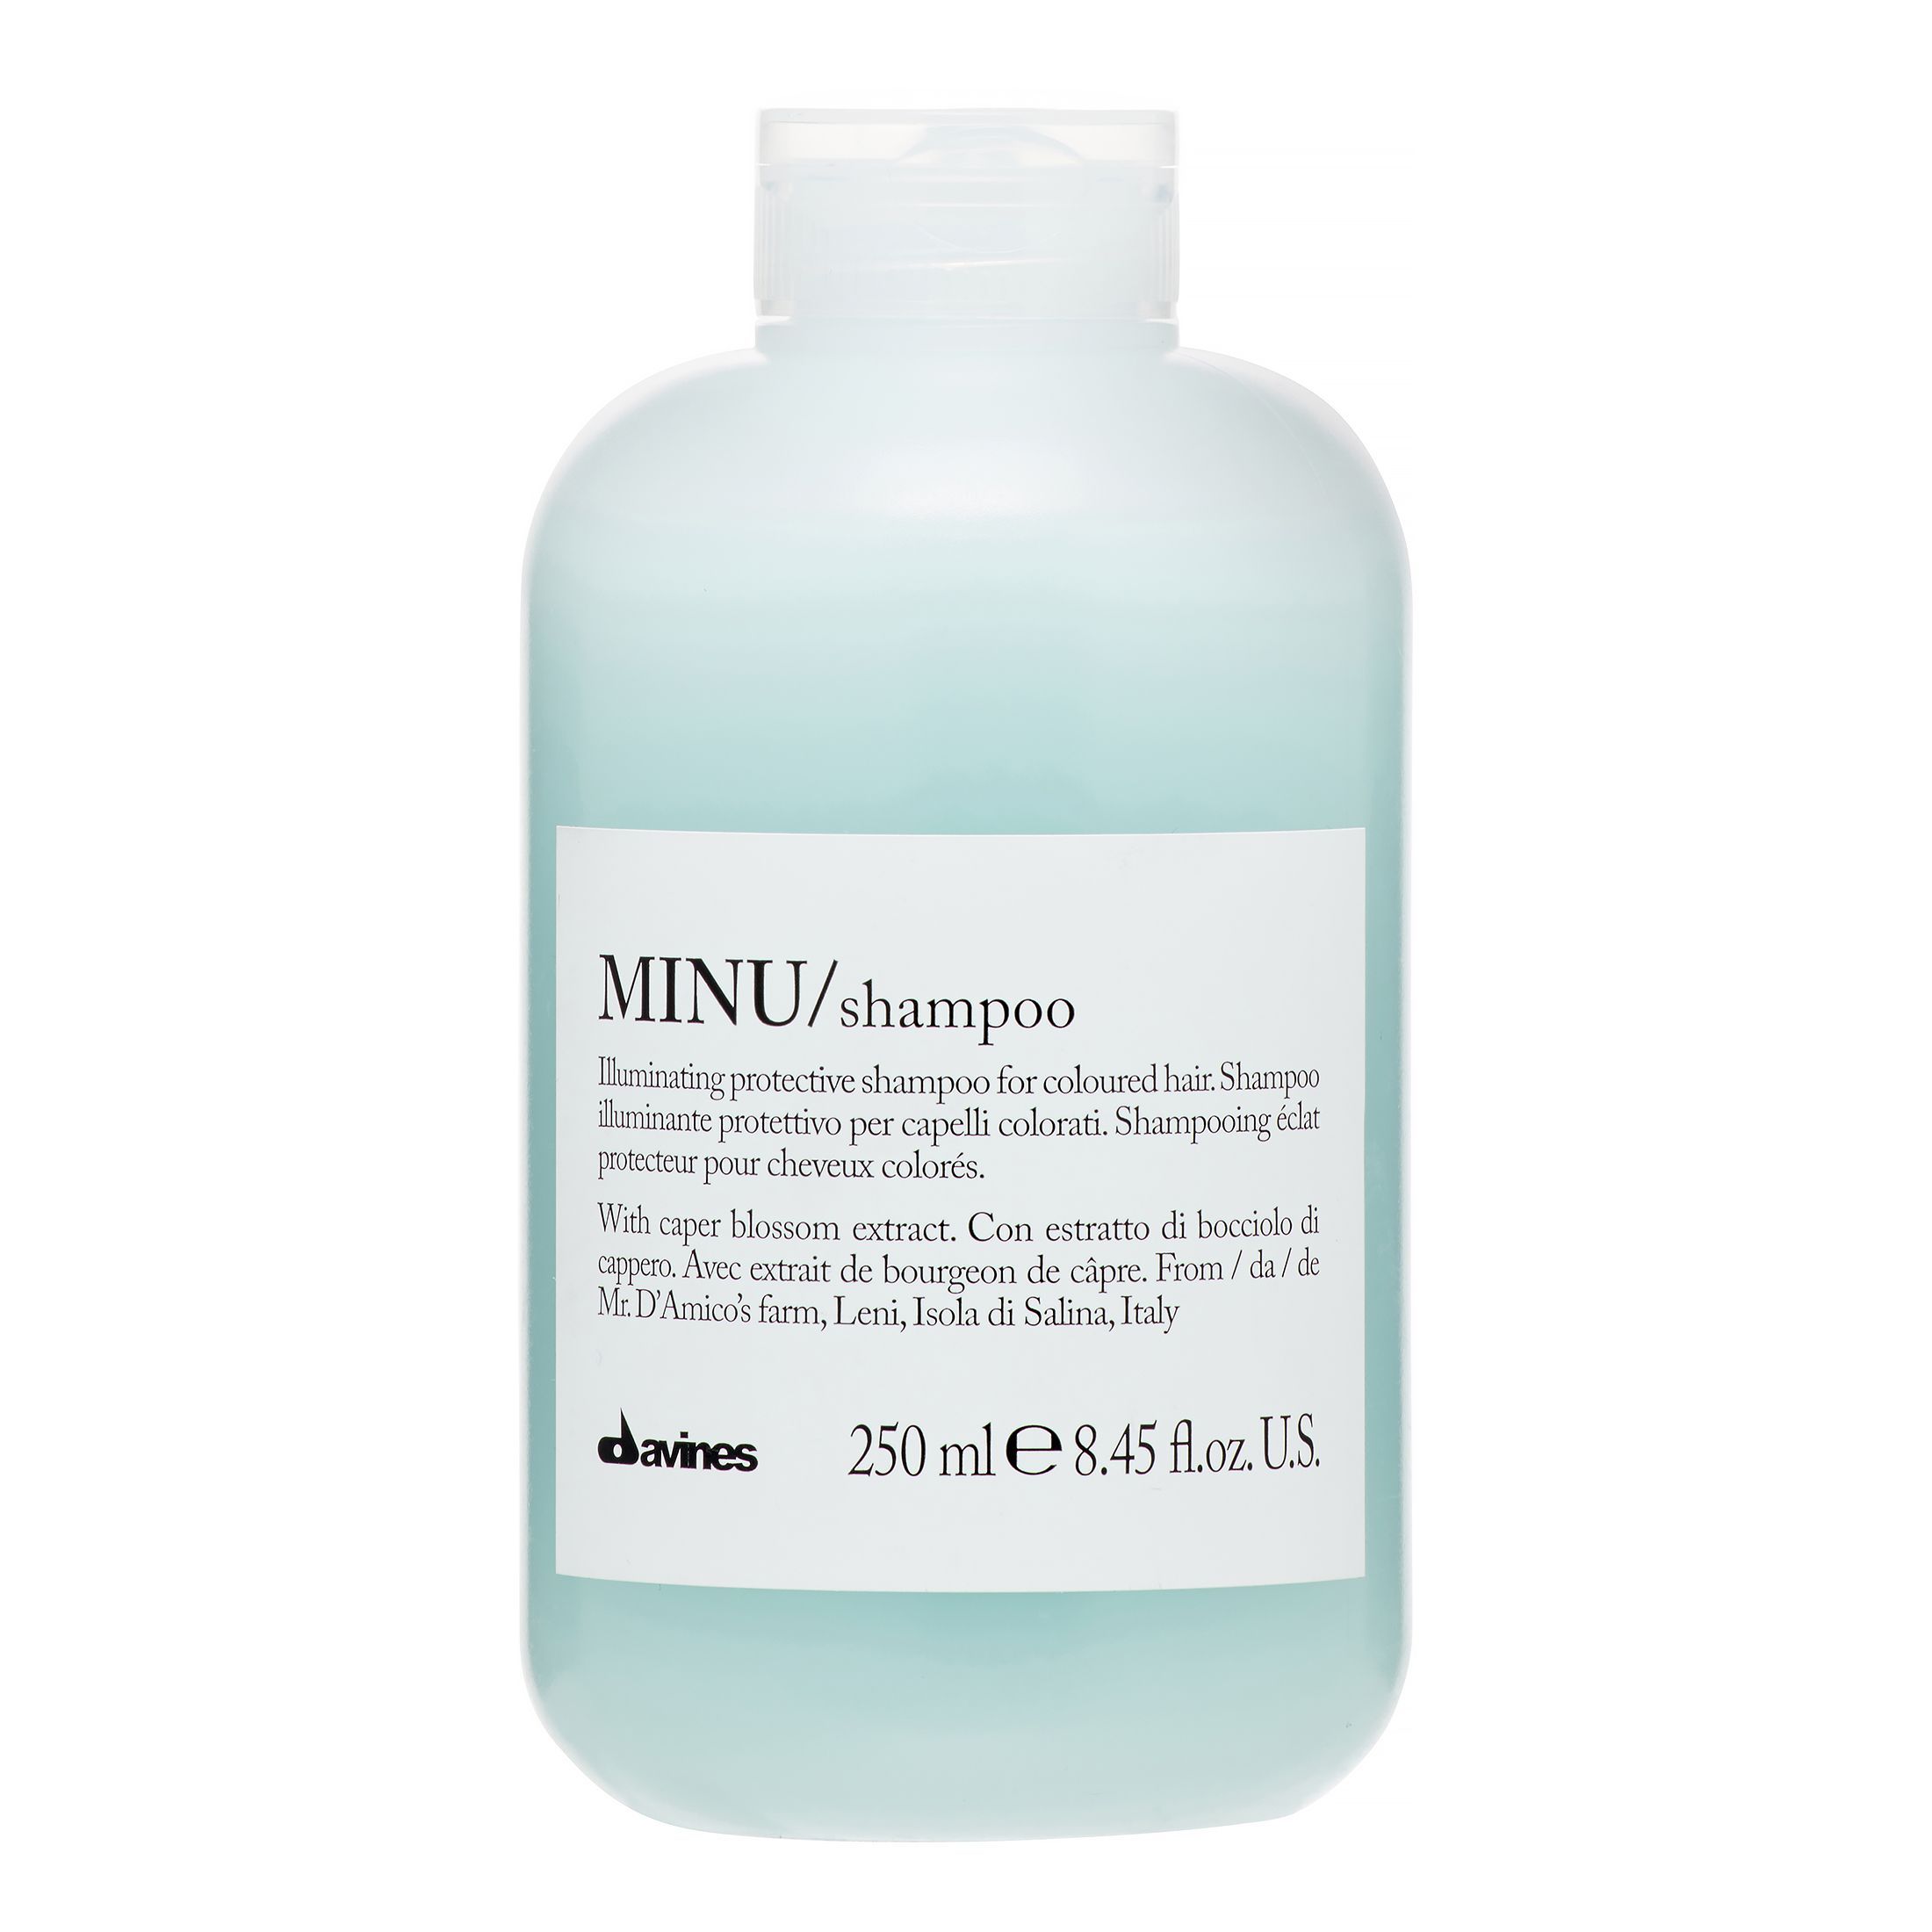 The 10 Best Shampoos for Color-Treated Hair - Colored-Hair Shampoos